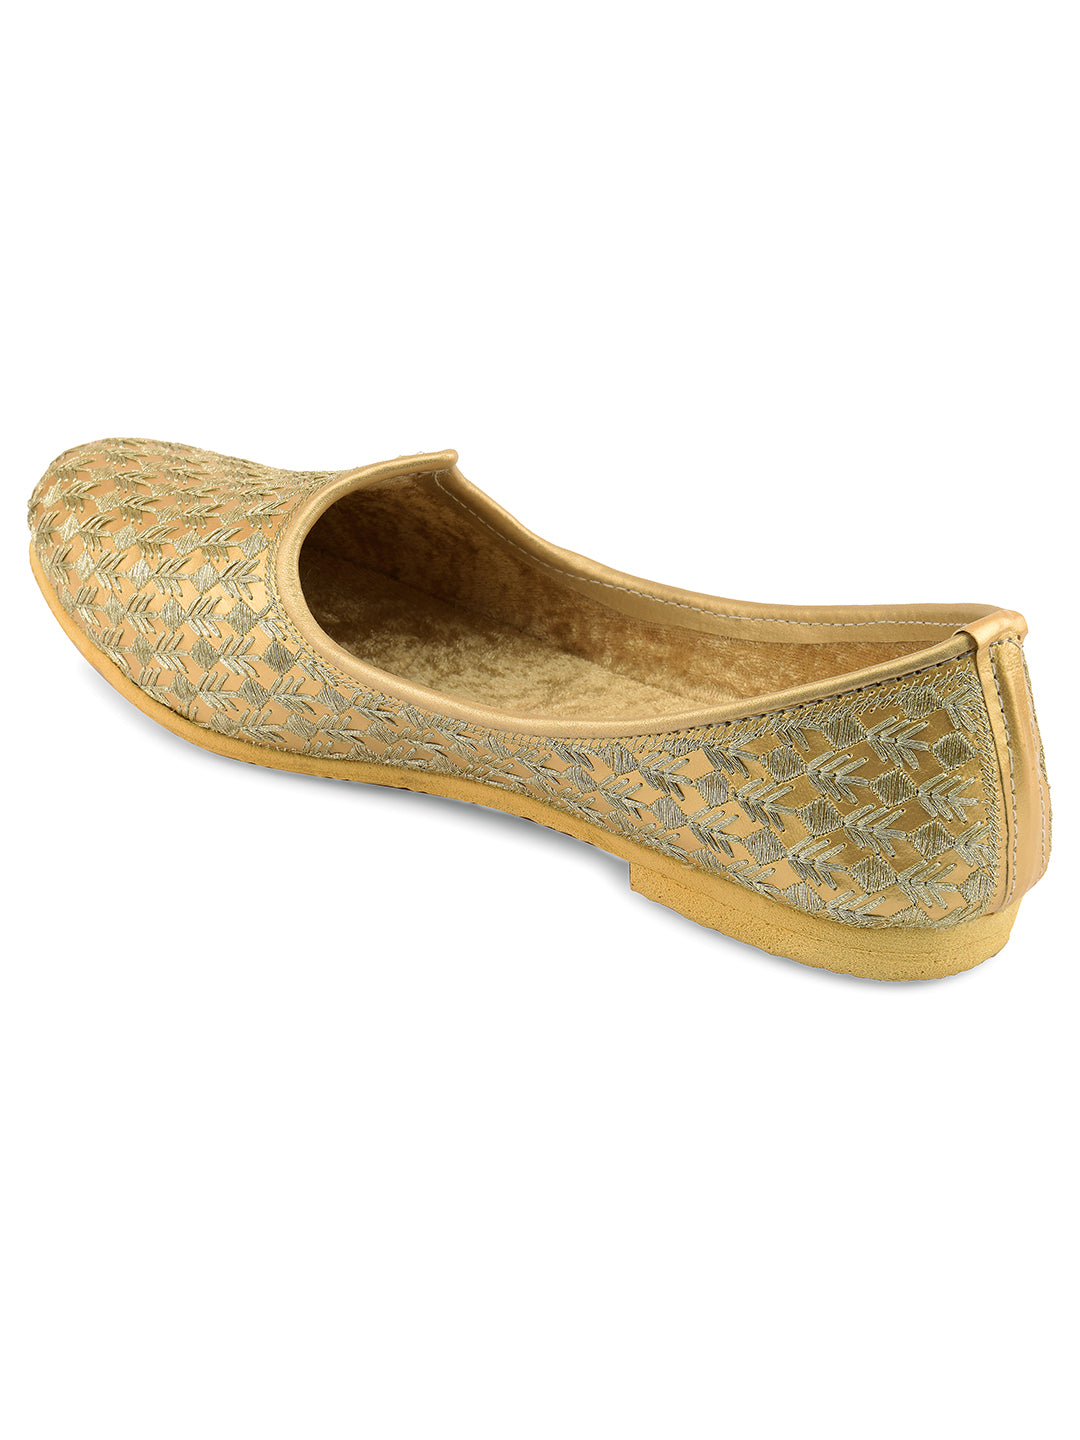 Men's Indian Ethnic Party Wear Golden Footwear - Desi Colour